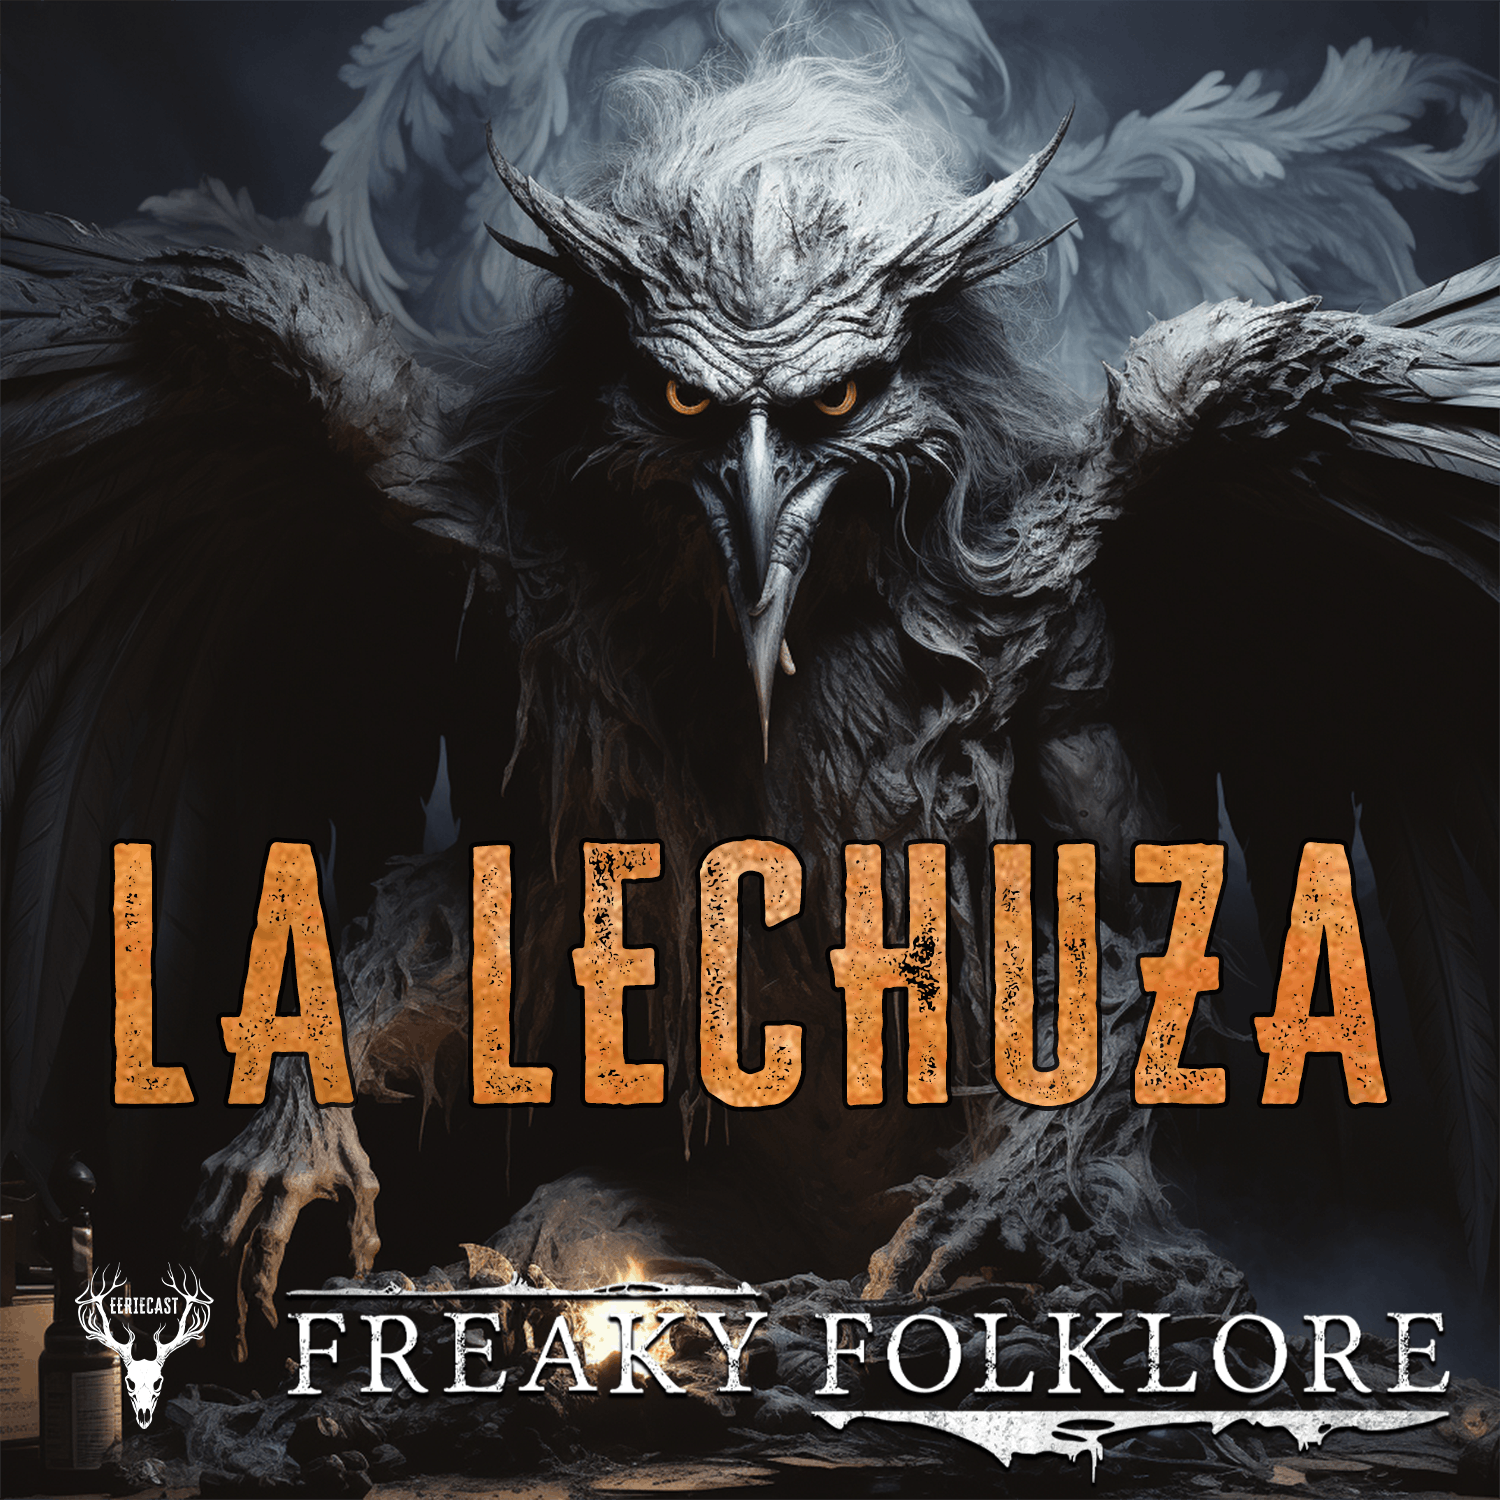 LA LECHUZA – The Owl Witch